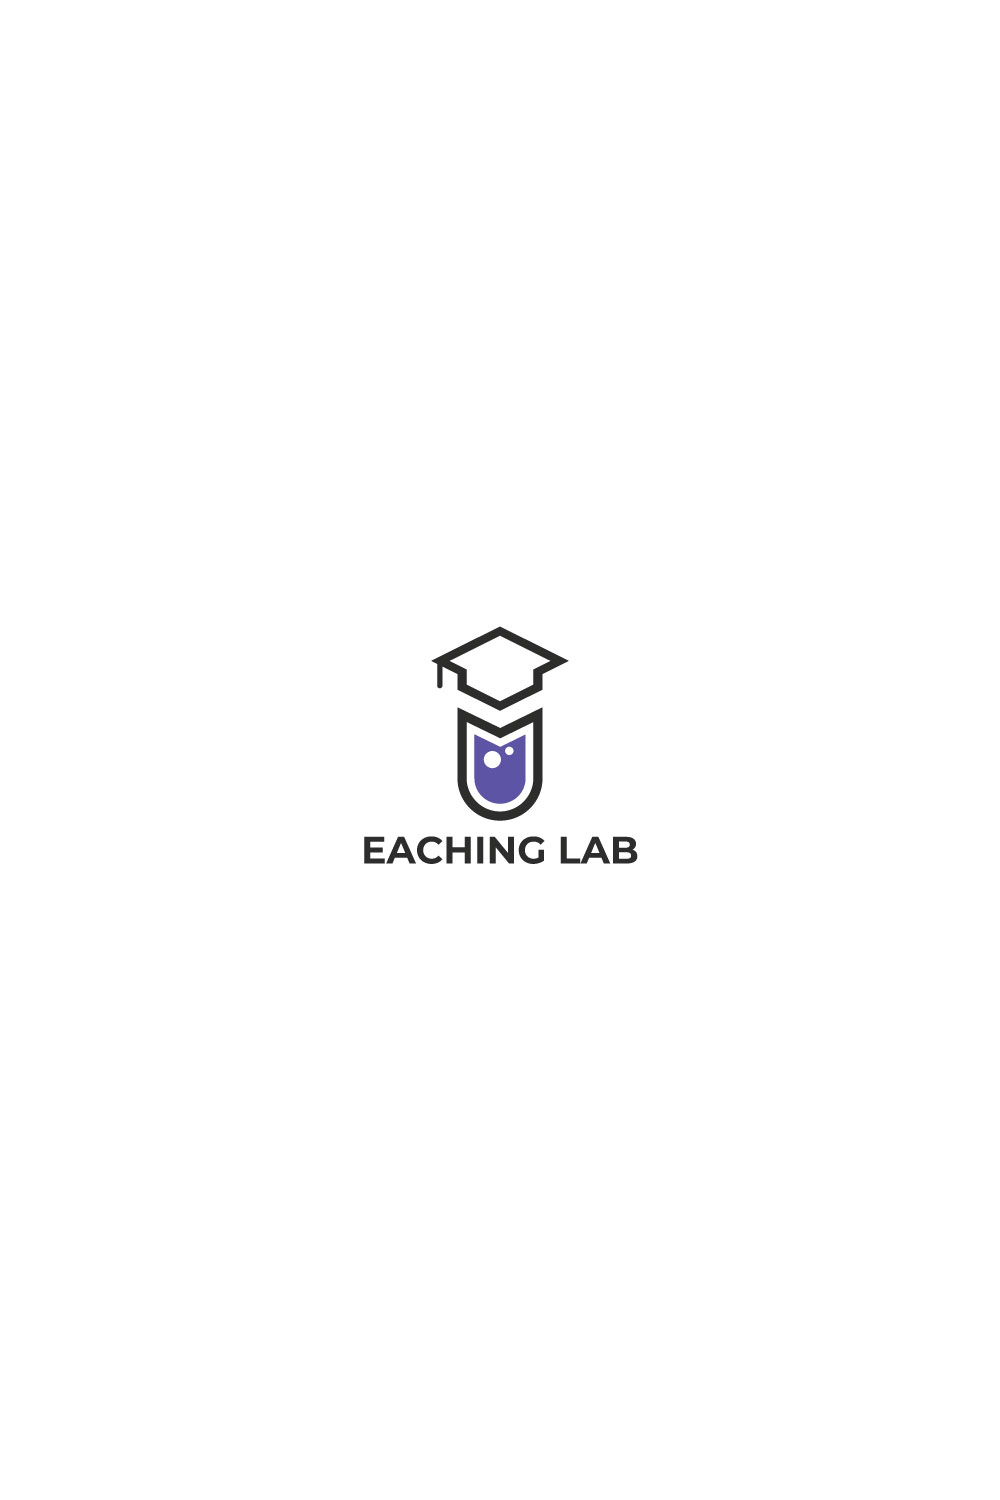 Teaching lab logo design pinterest preview image.